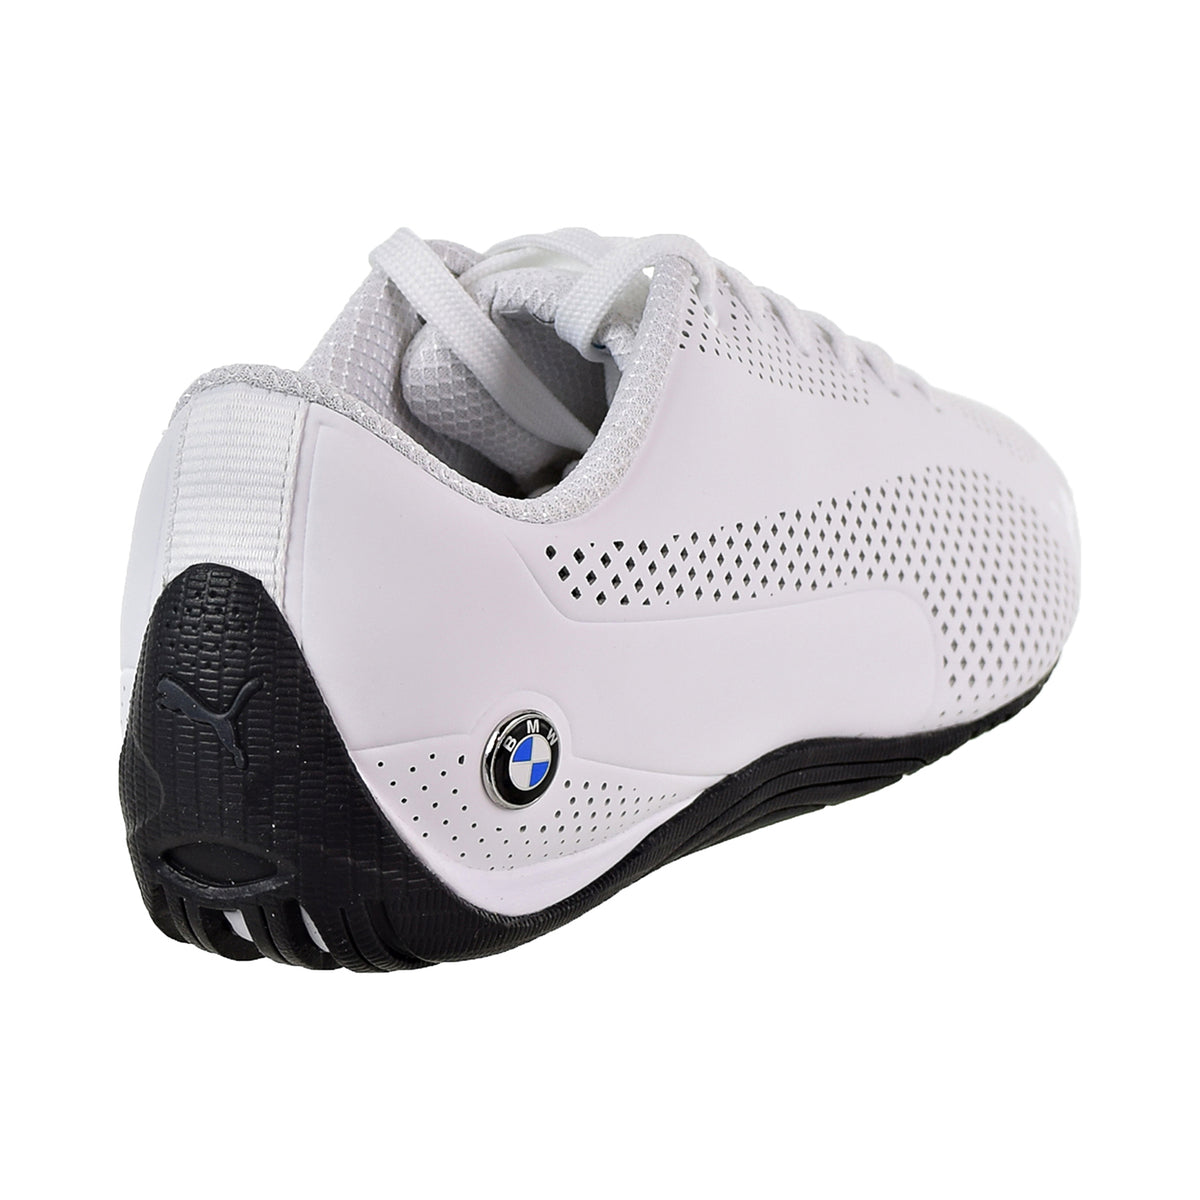 Descendencia cosecha arbusto Puma BMW Motorsport Drift Cat 5 Ultra Men's Shoes White